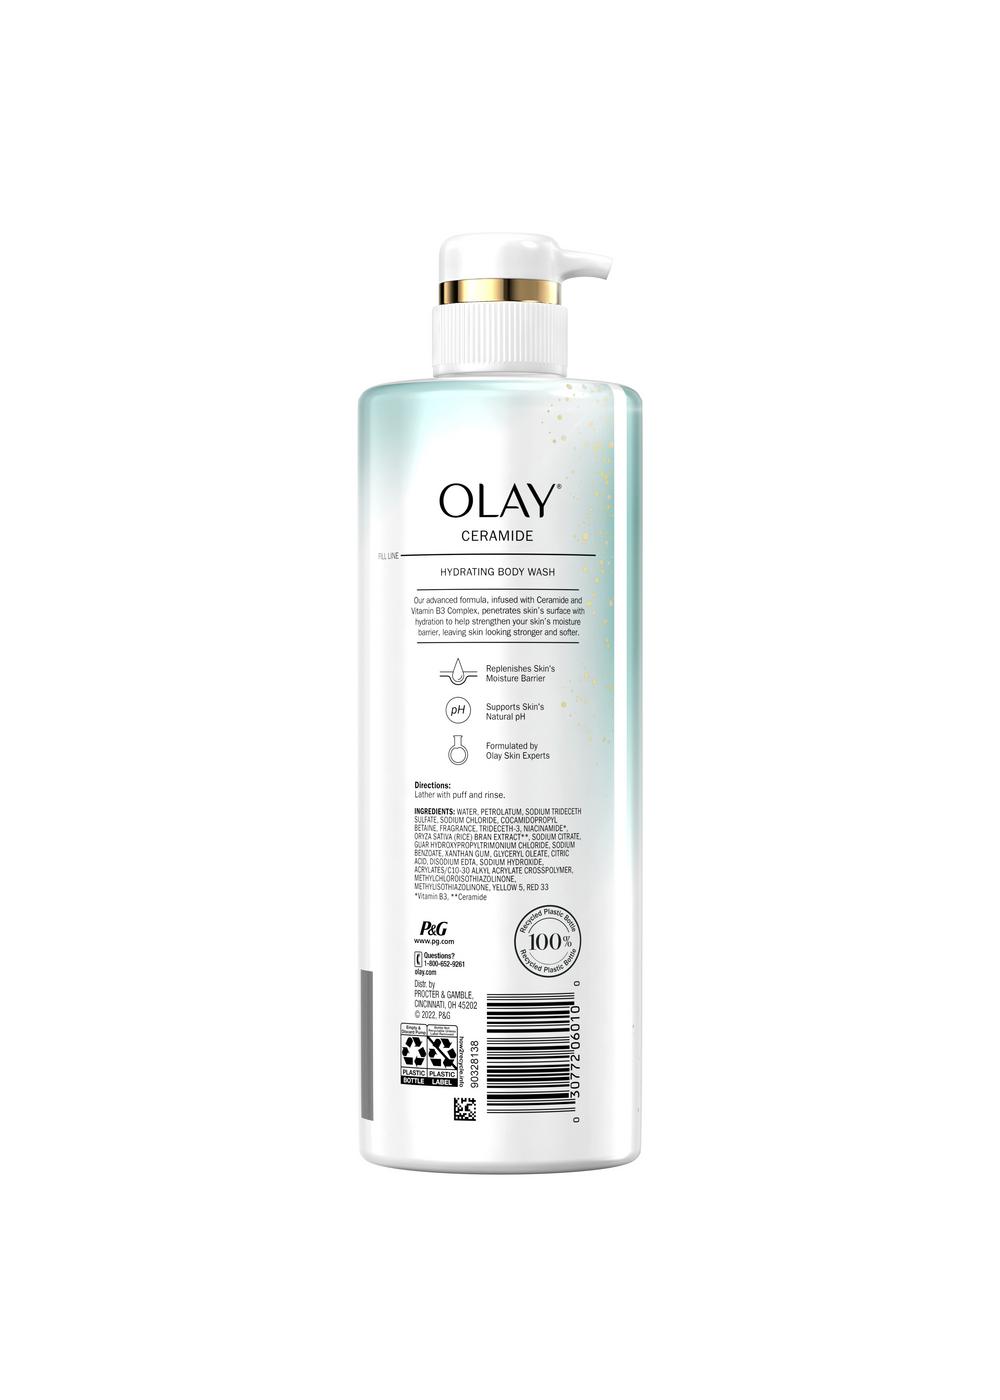 Olay Hydrating Body Wash - Ceramide; image 2 of 2